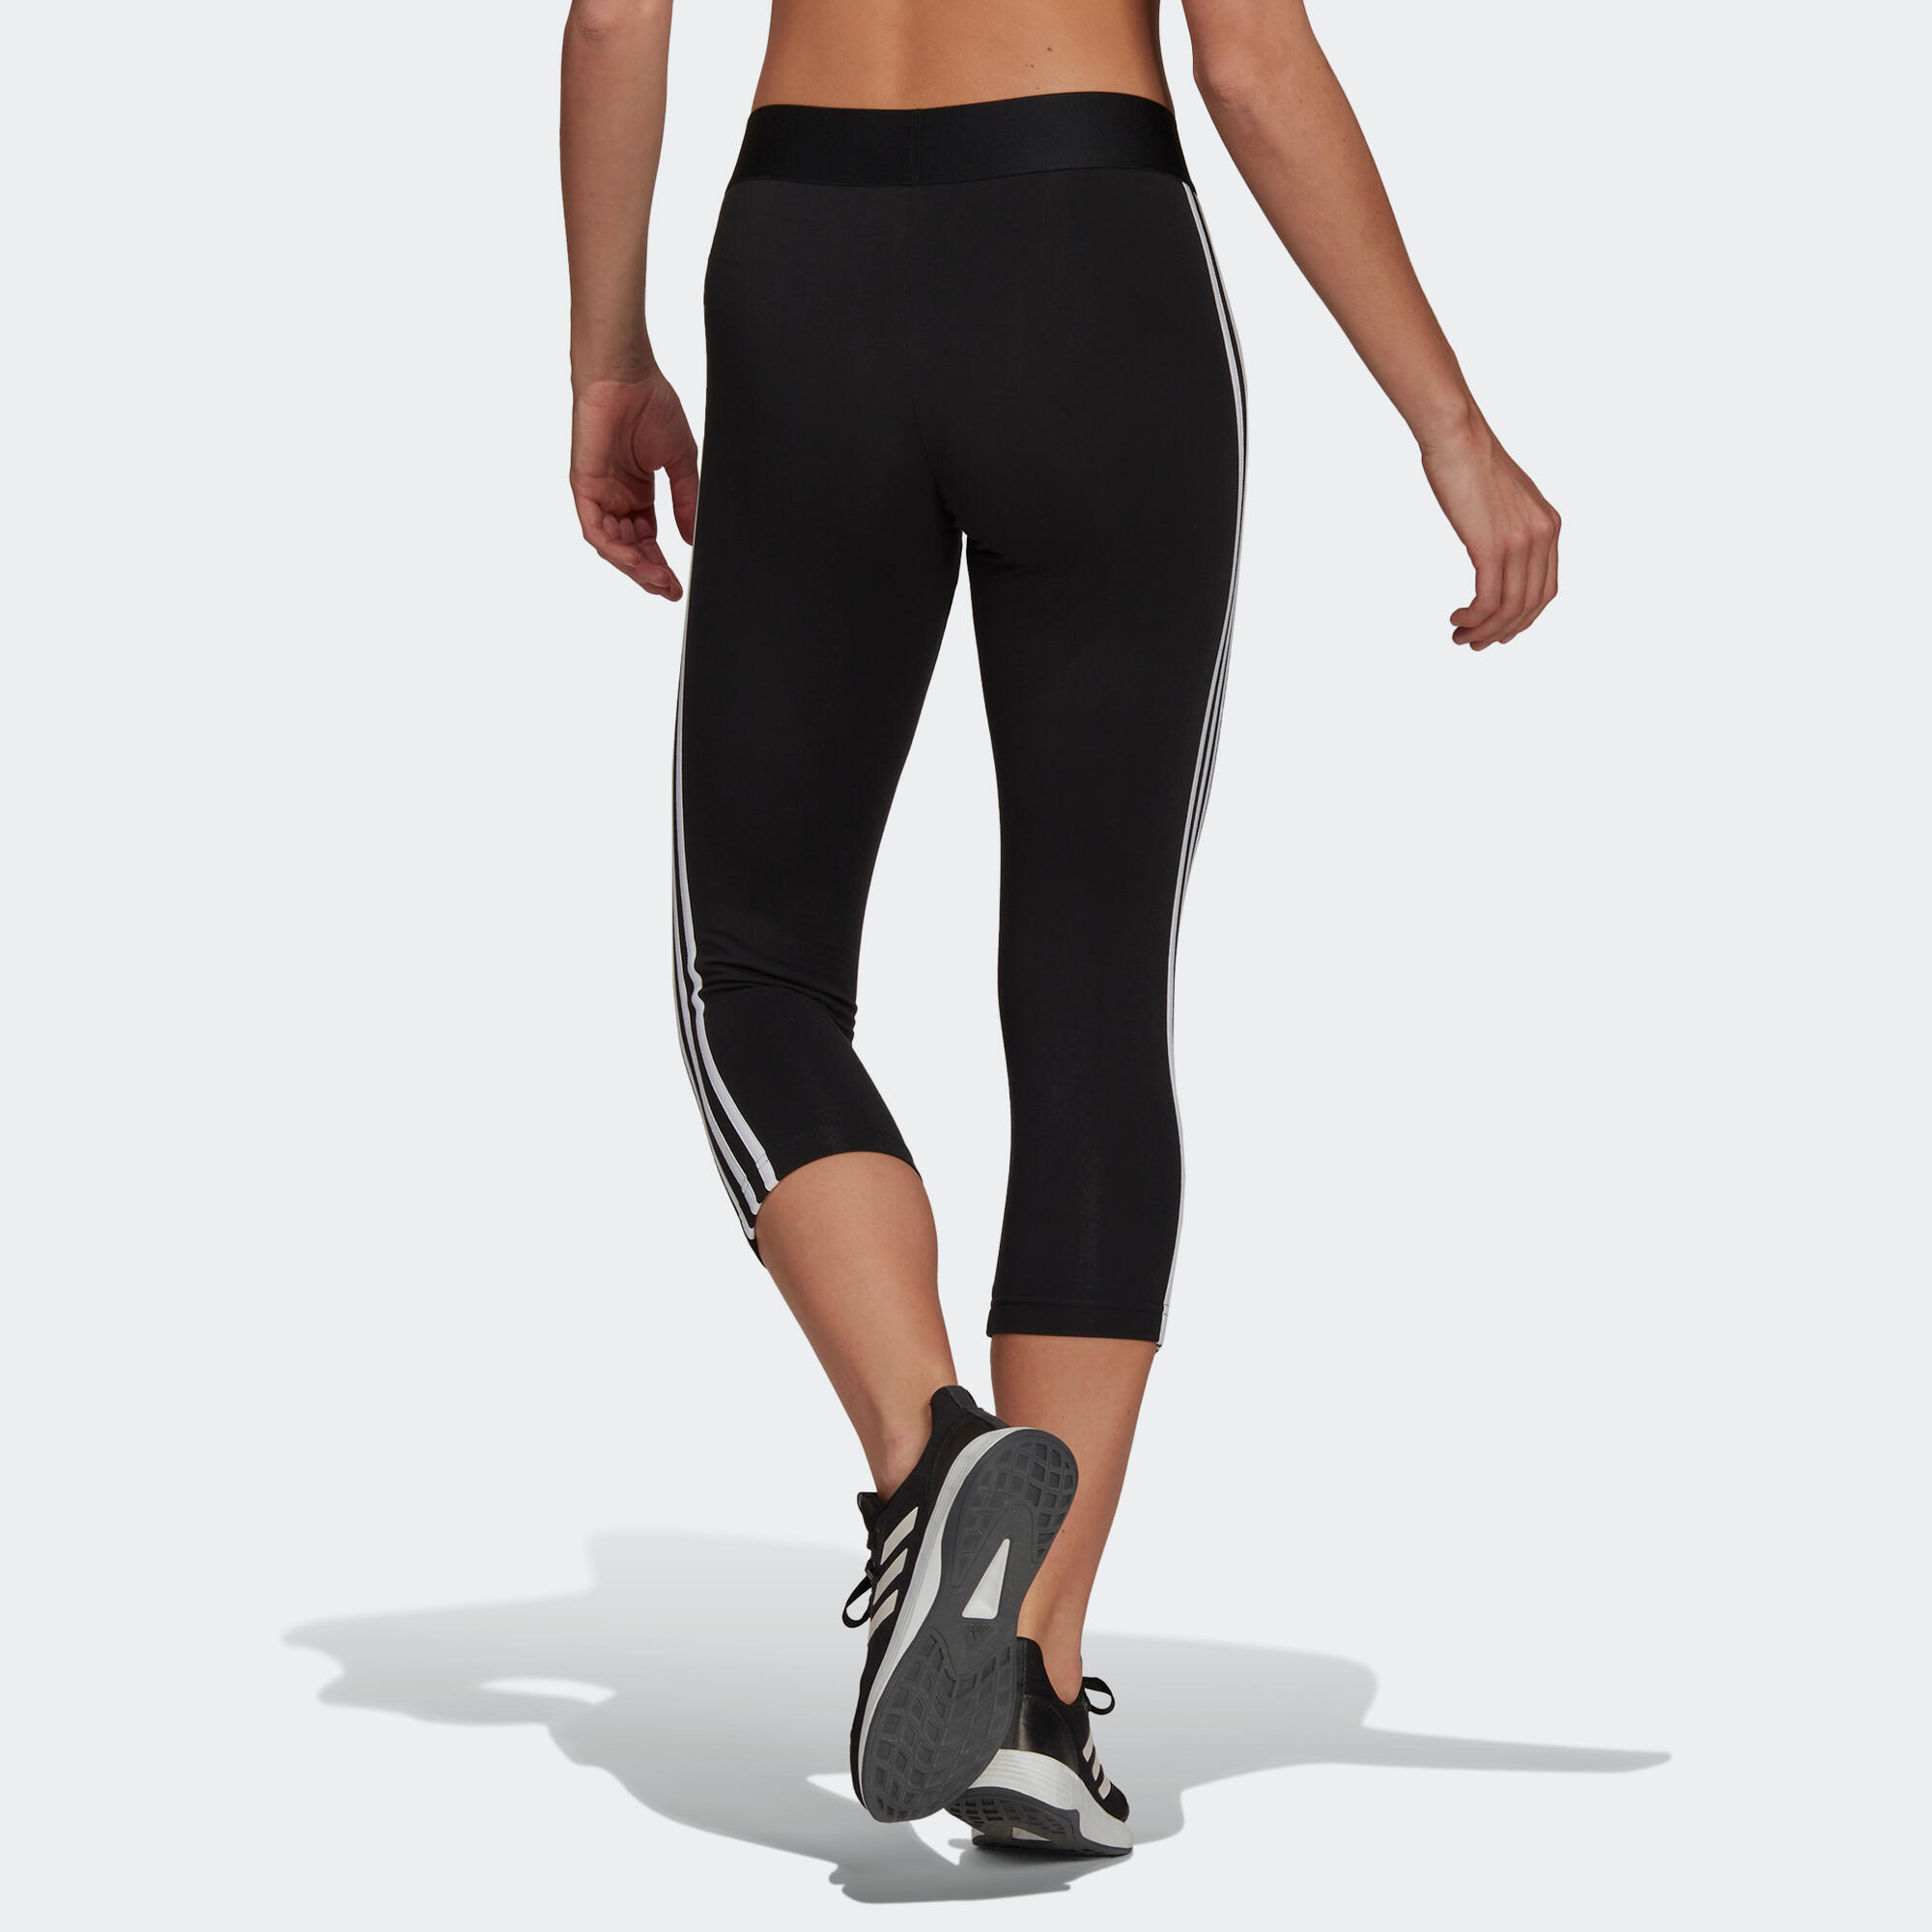 Women's Low-Impact Fitness Leggings - Black 2/6